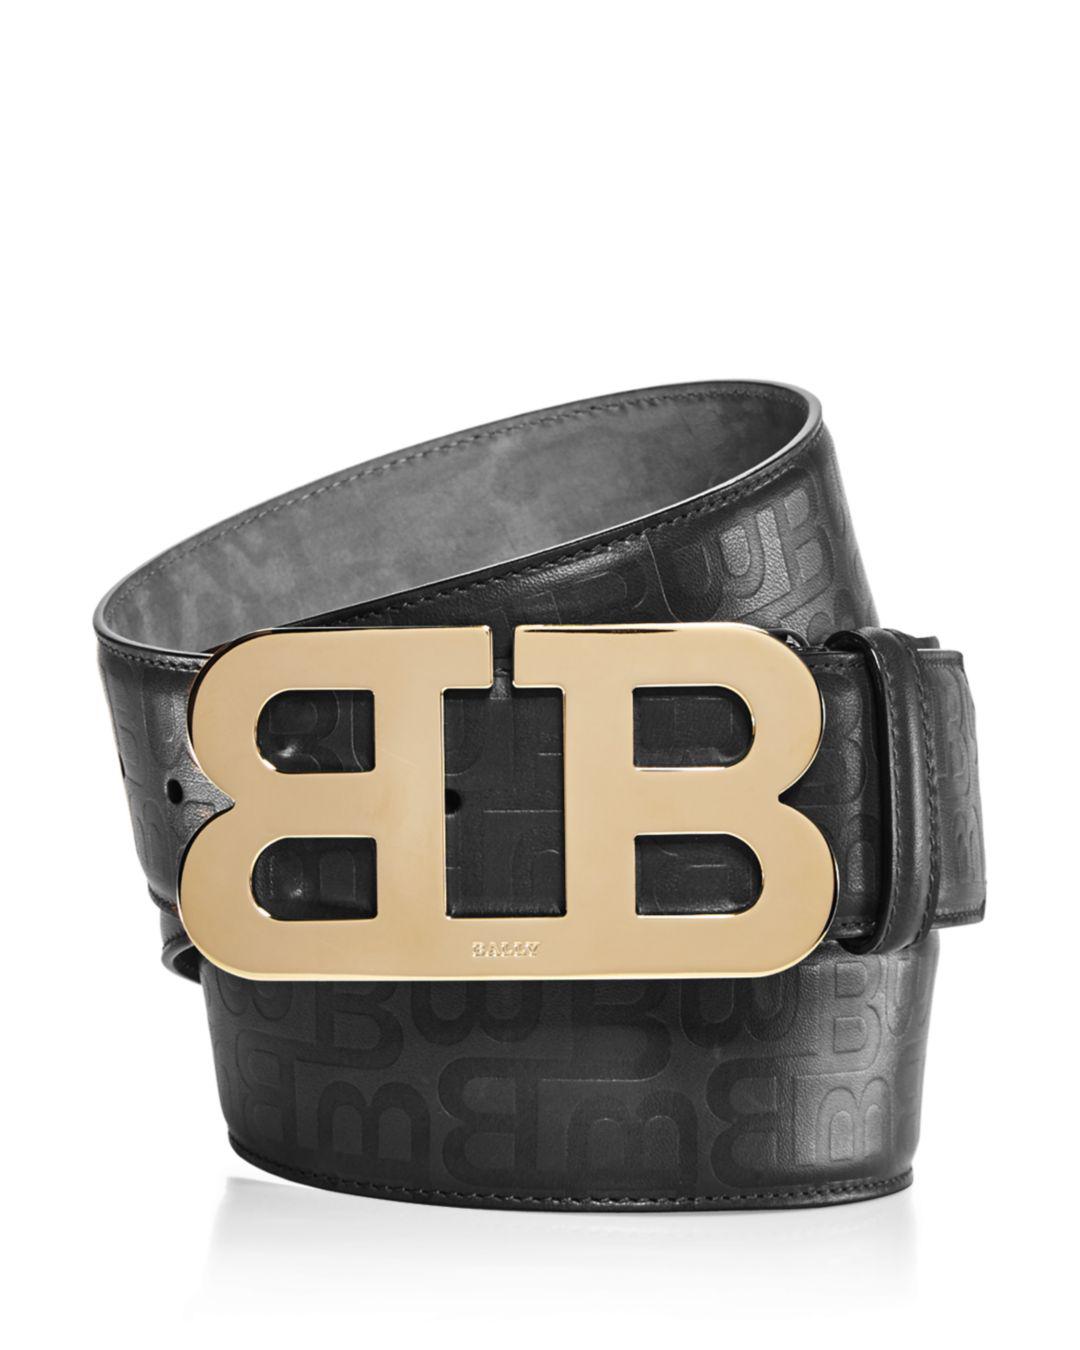 Bally Mirror B Buckle Stamped Belt in Black for Men - Lyst